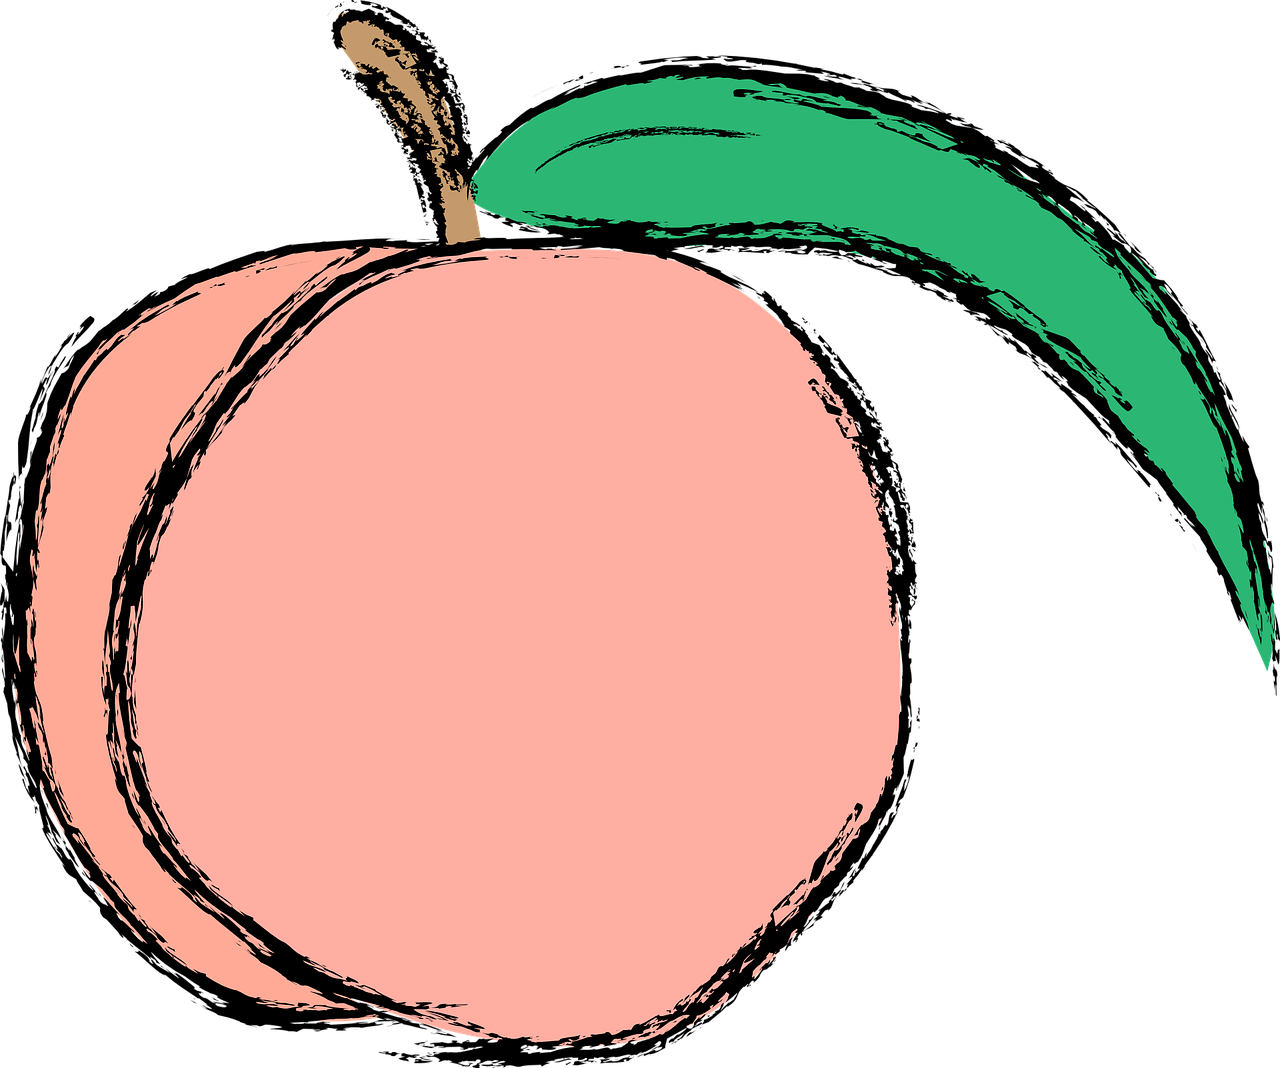 Cartoon Peaches Png 5 2 Peach Png Imagepng 1000×1000 복숭아 과일 그림